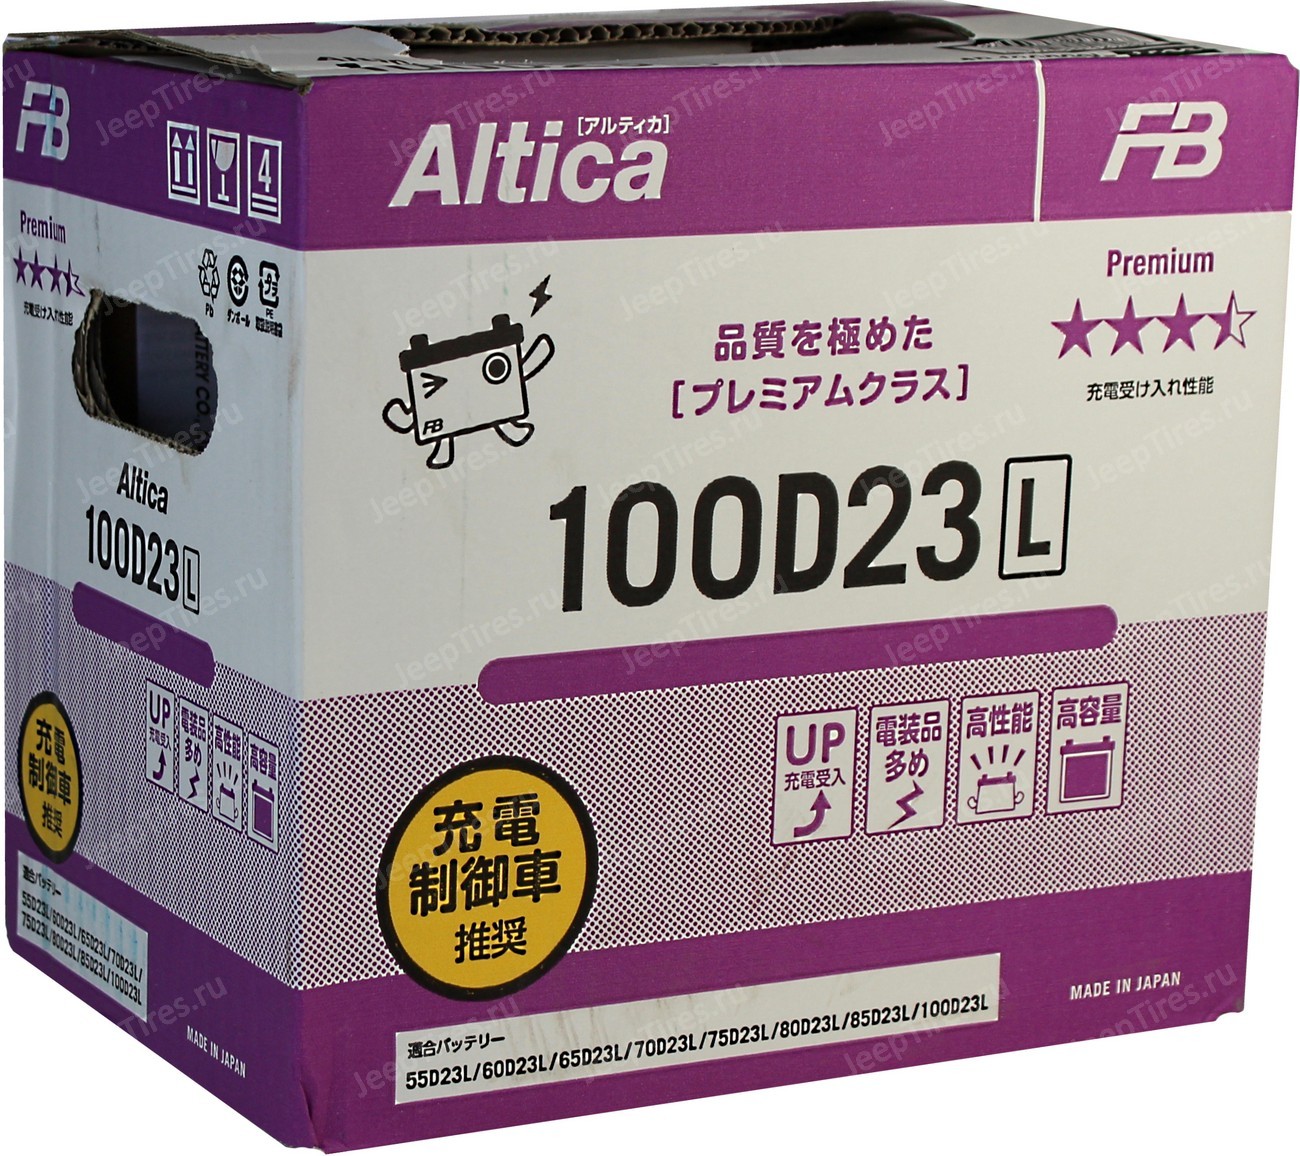 125d26l Furukawa Altica Premium. Fb Altica Premium 6ст-75 100d23r.